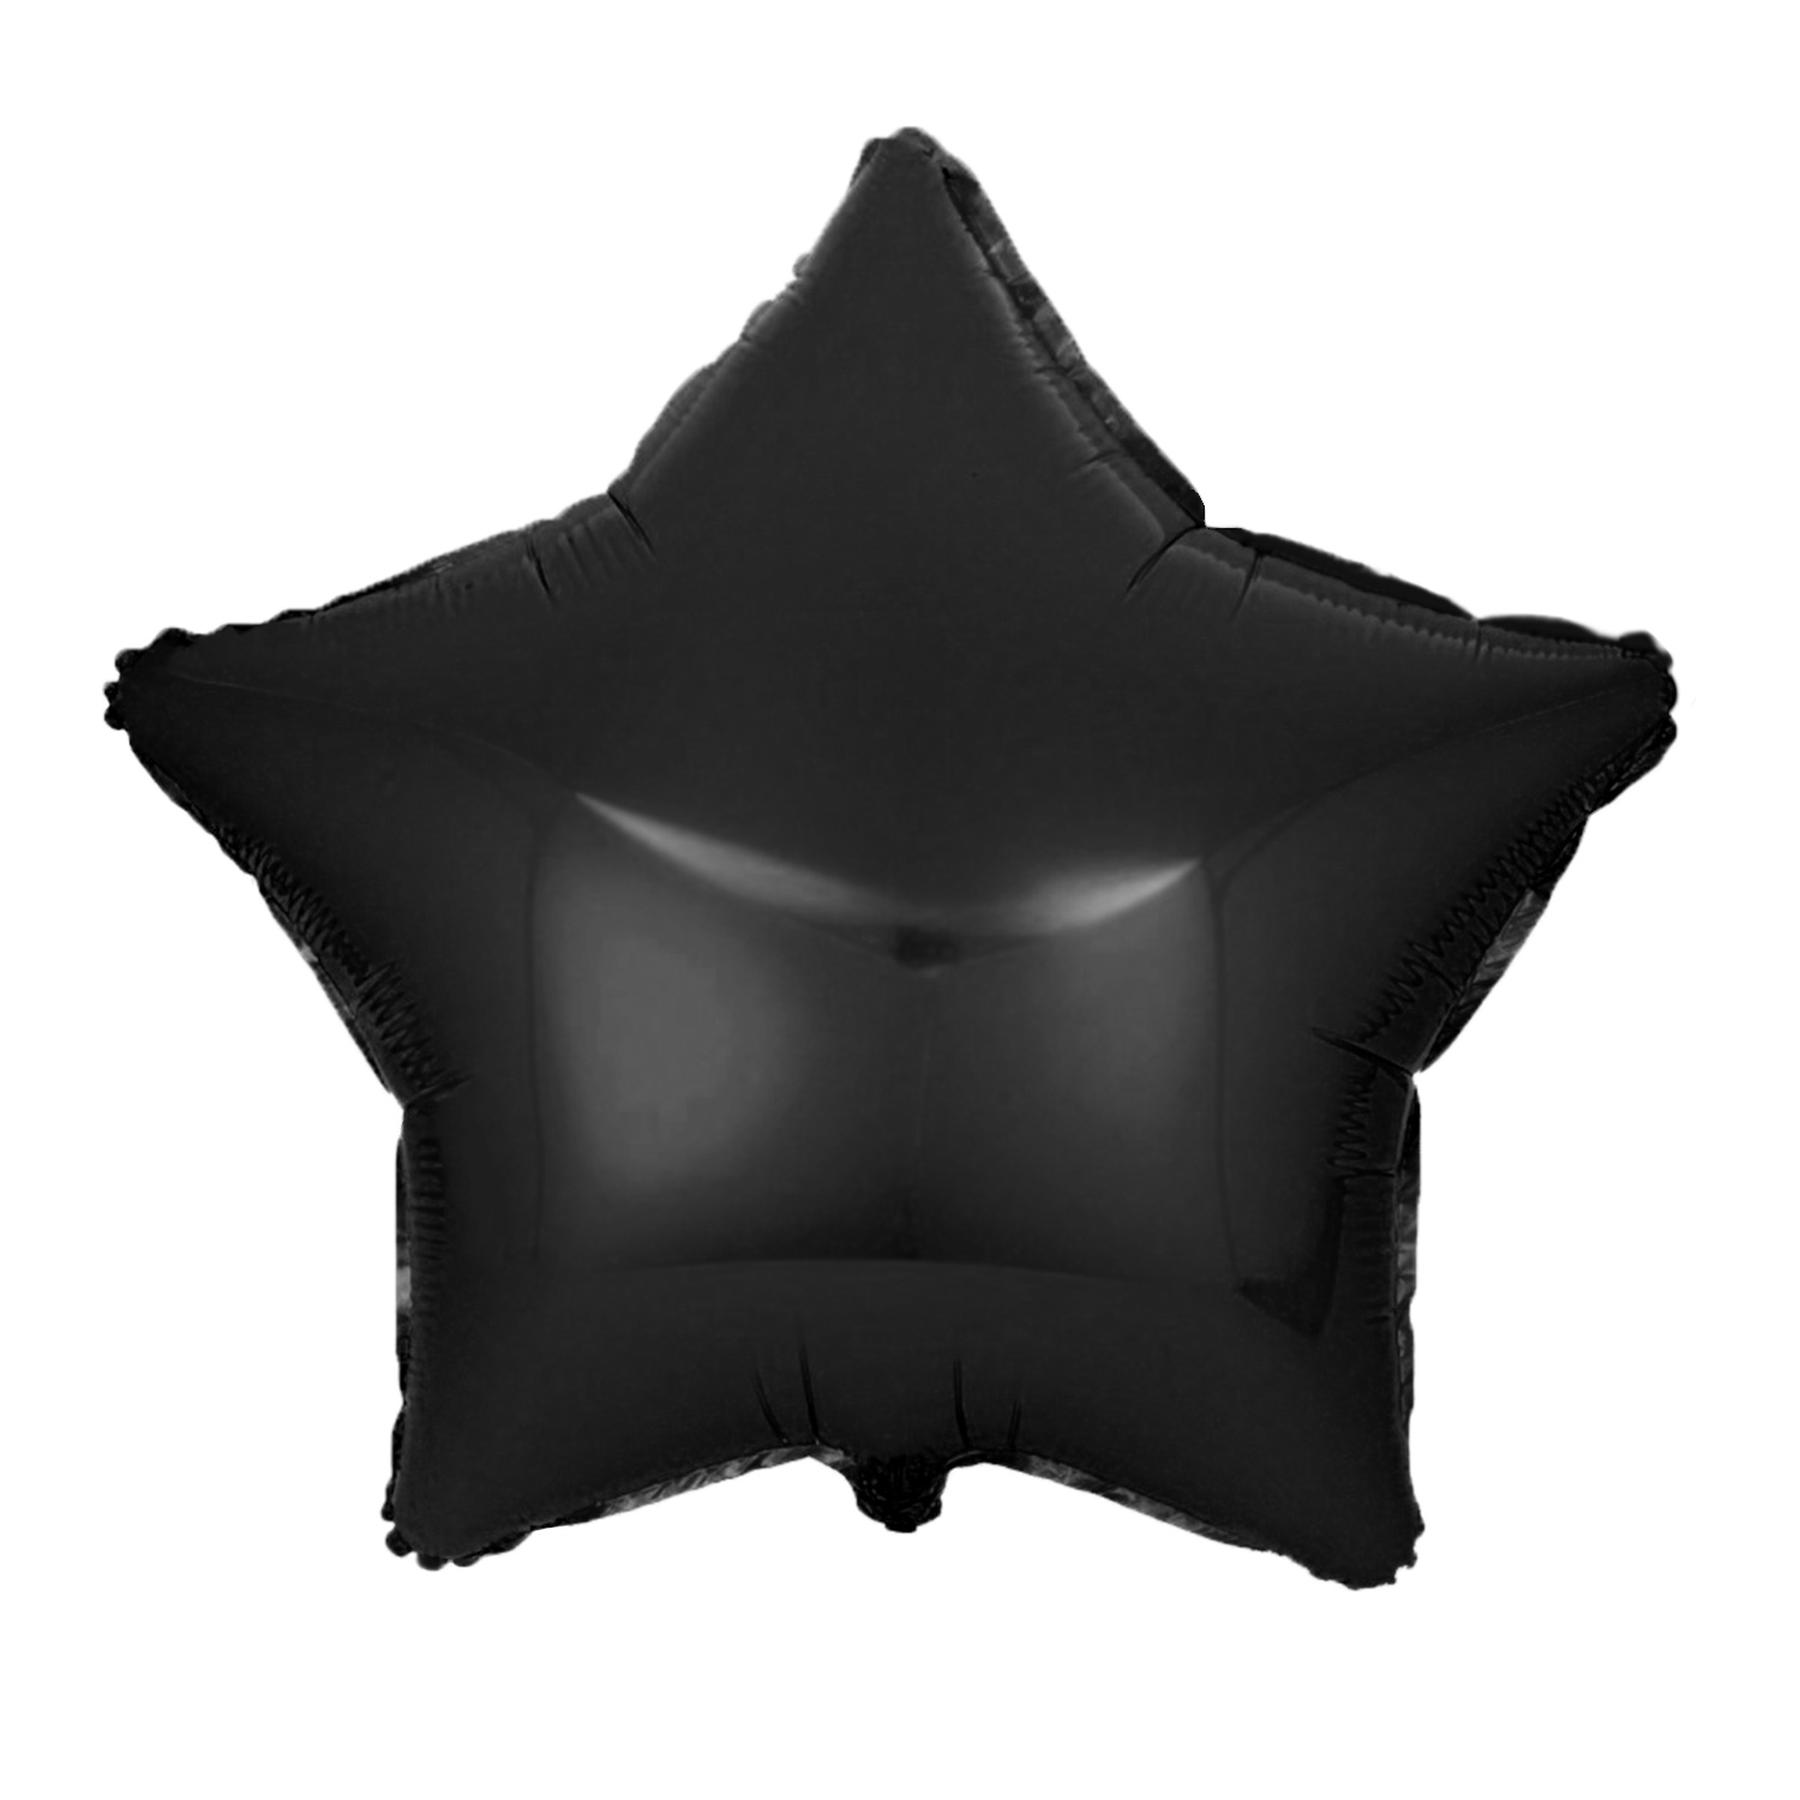 Folienballon Stern, schwarz, ca. 45 cm